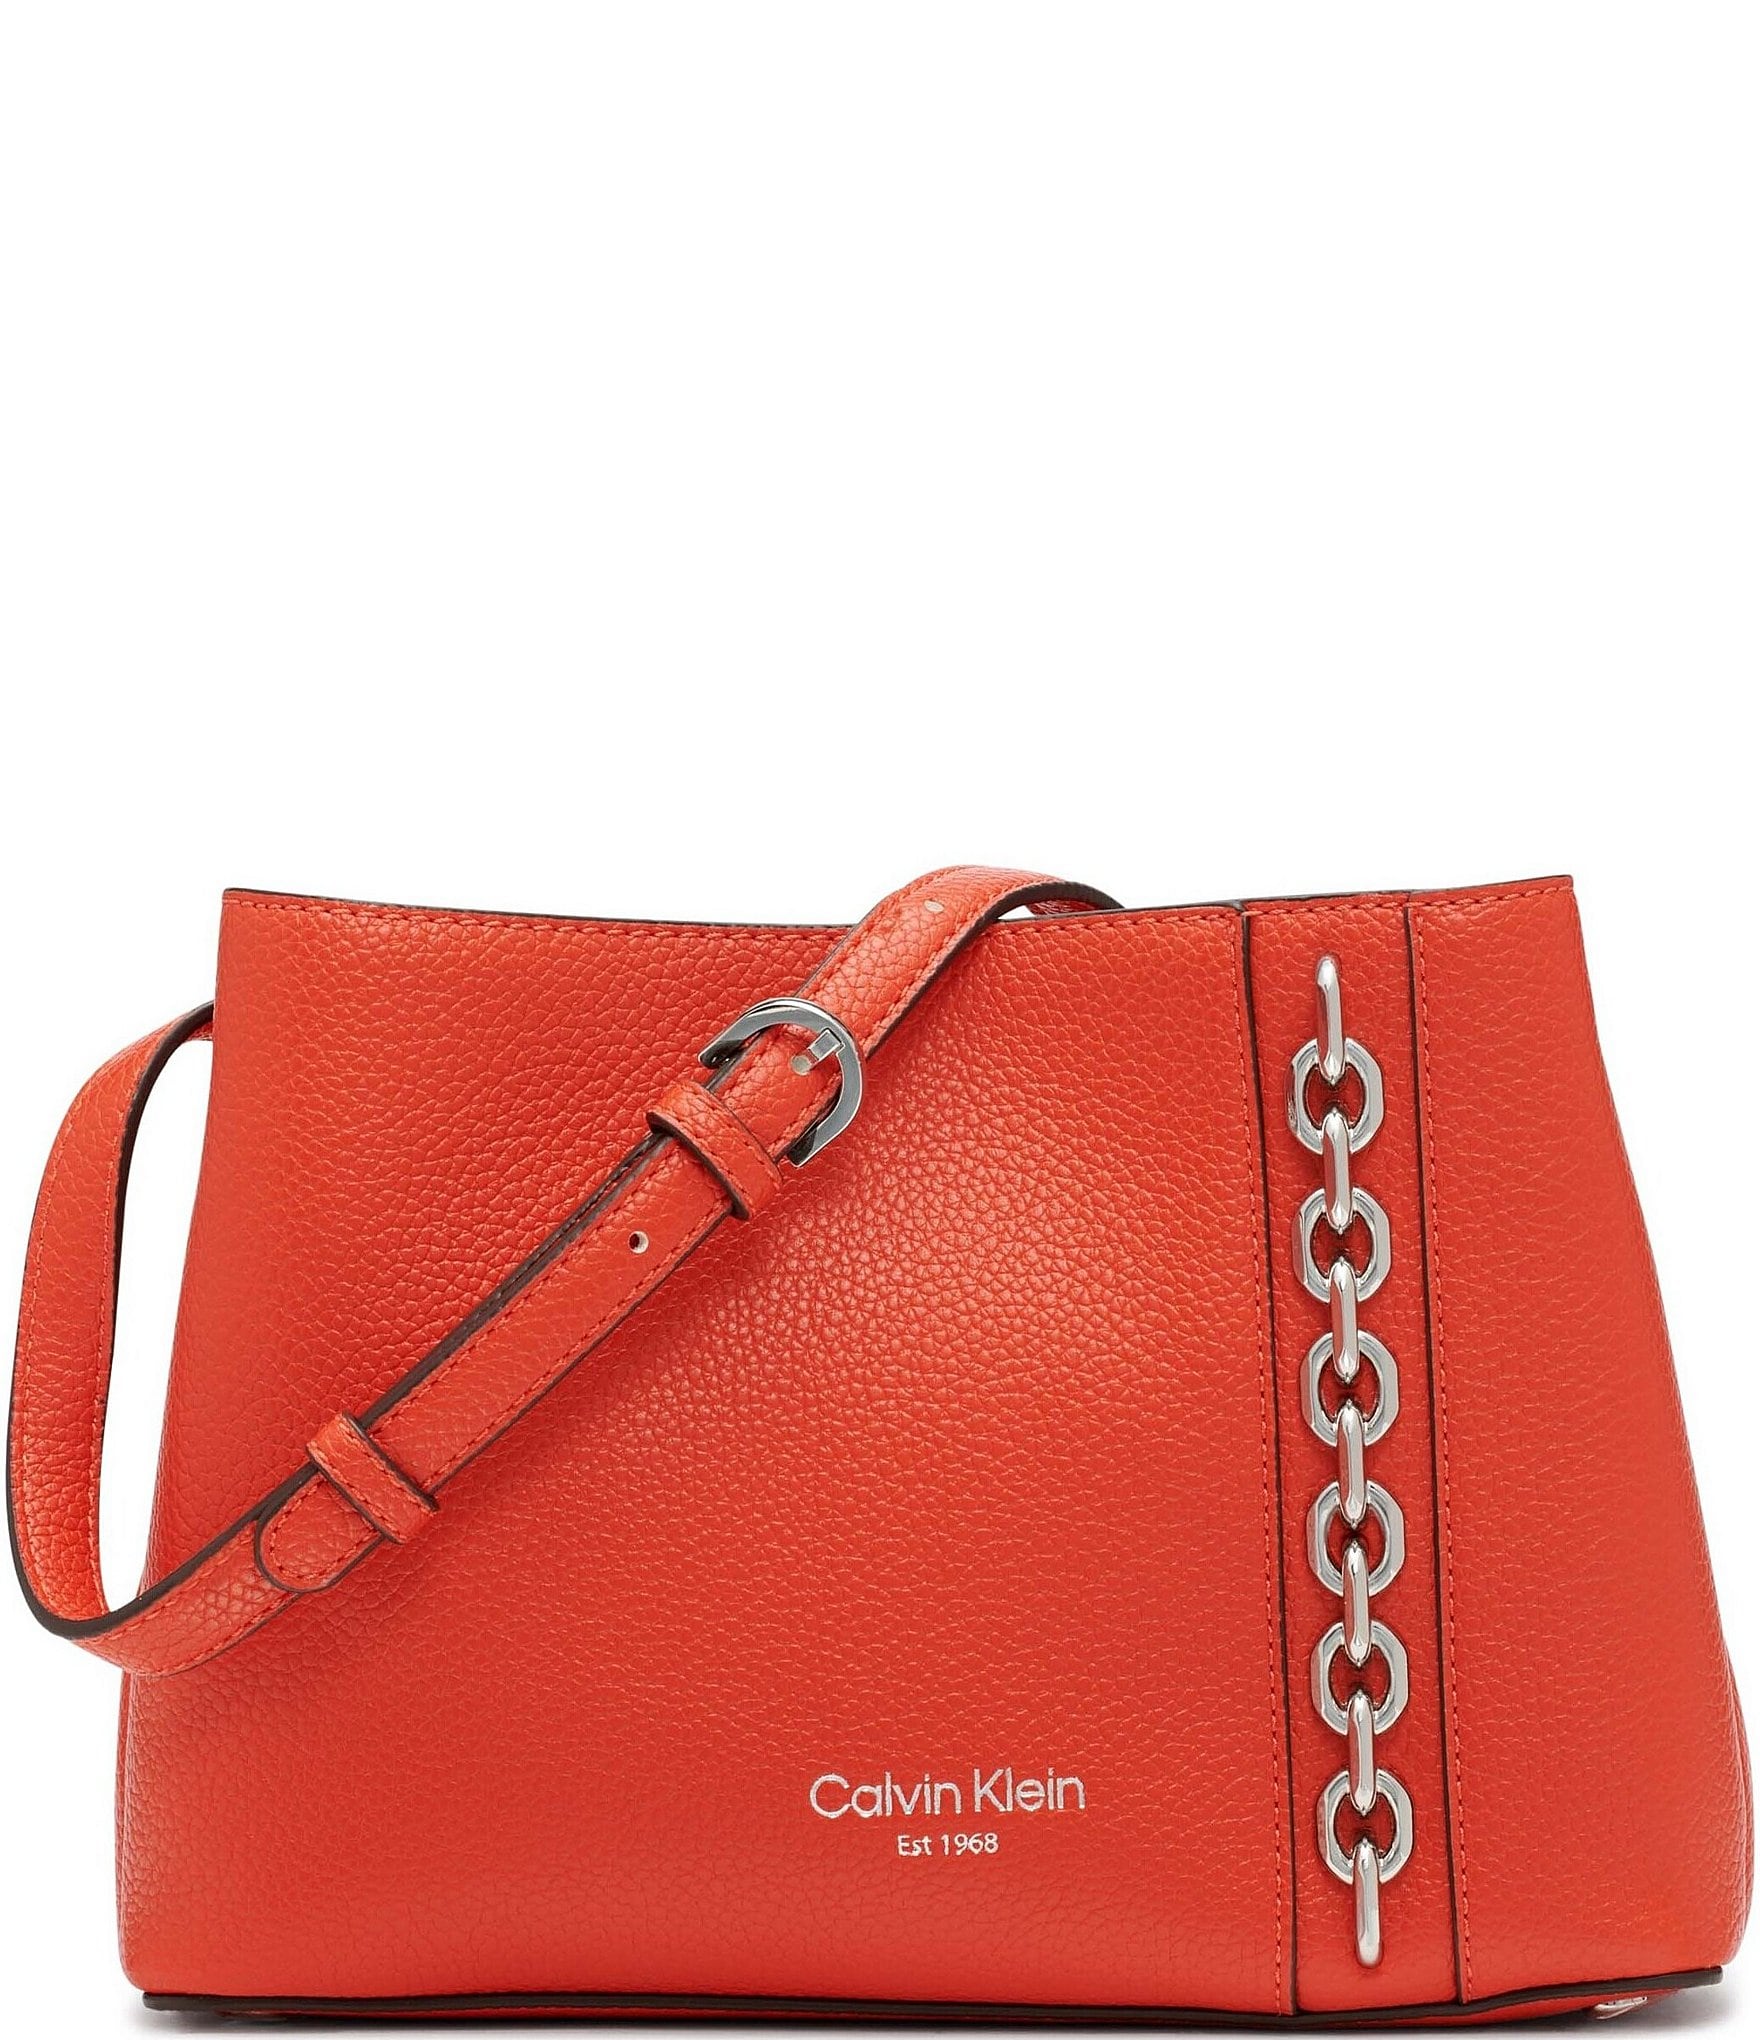 calvin klein sale: Handbags | Dillard's